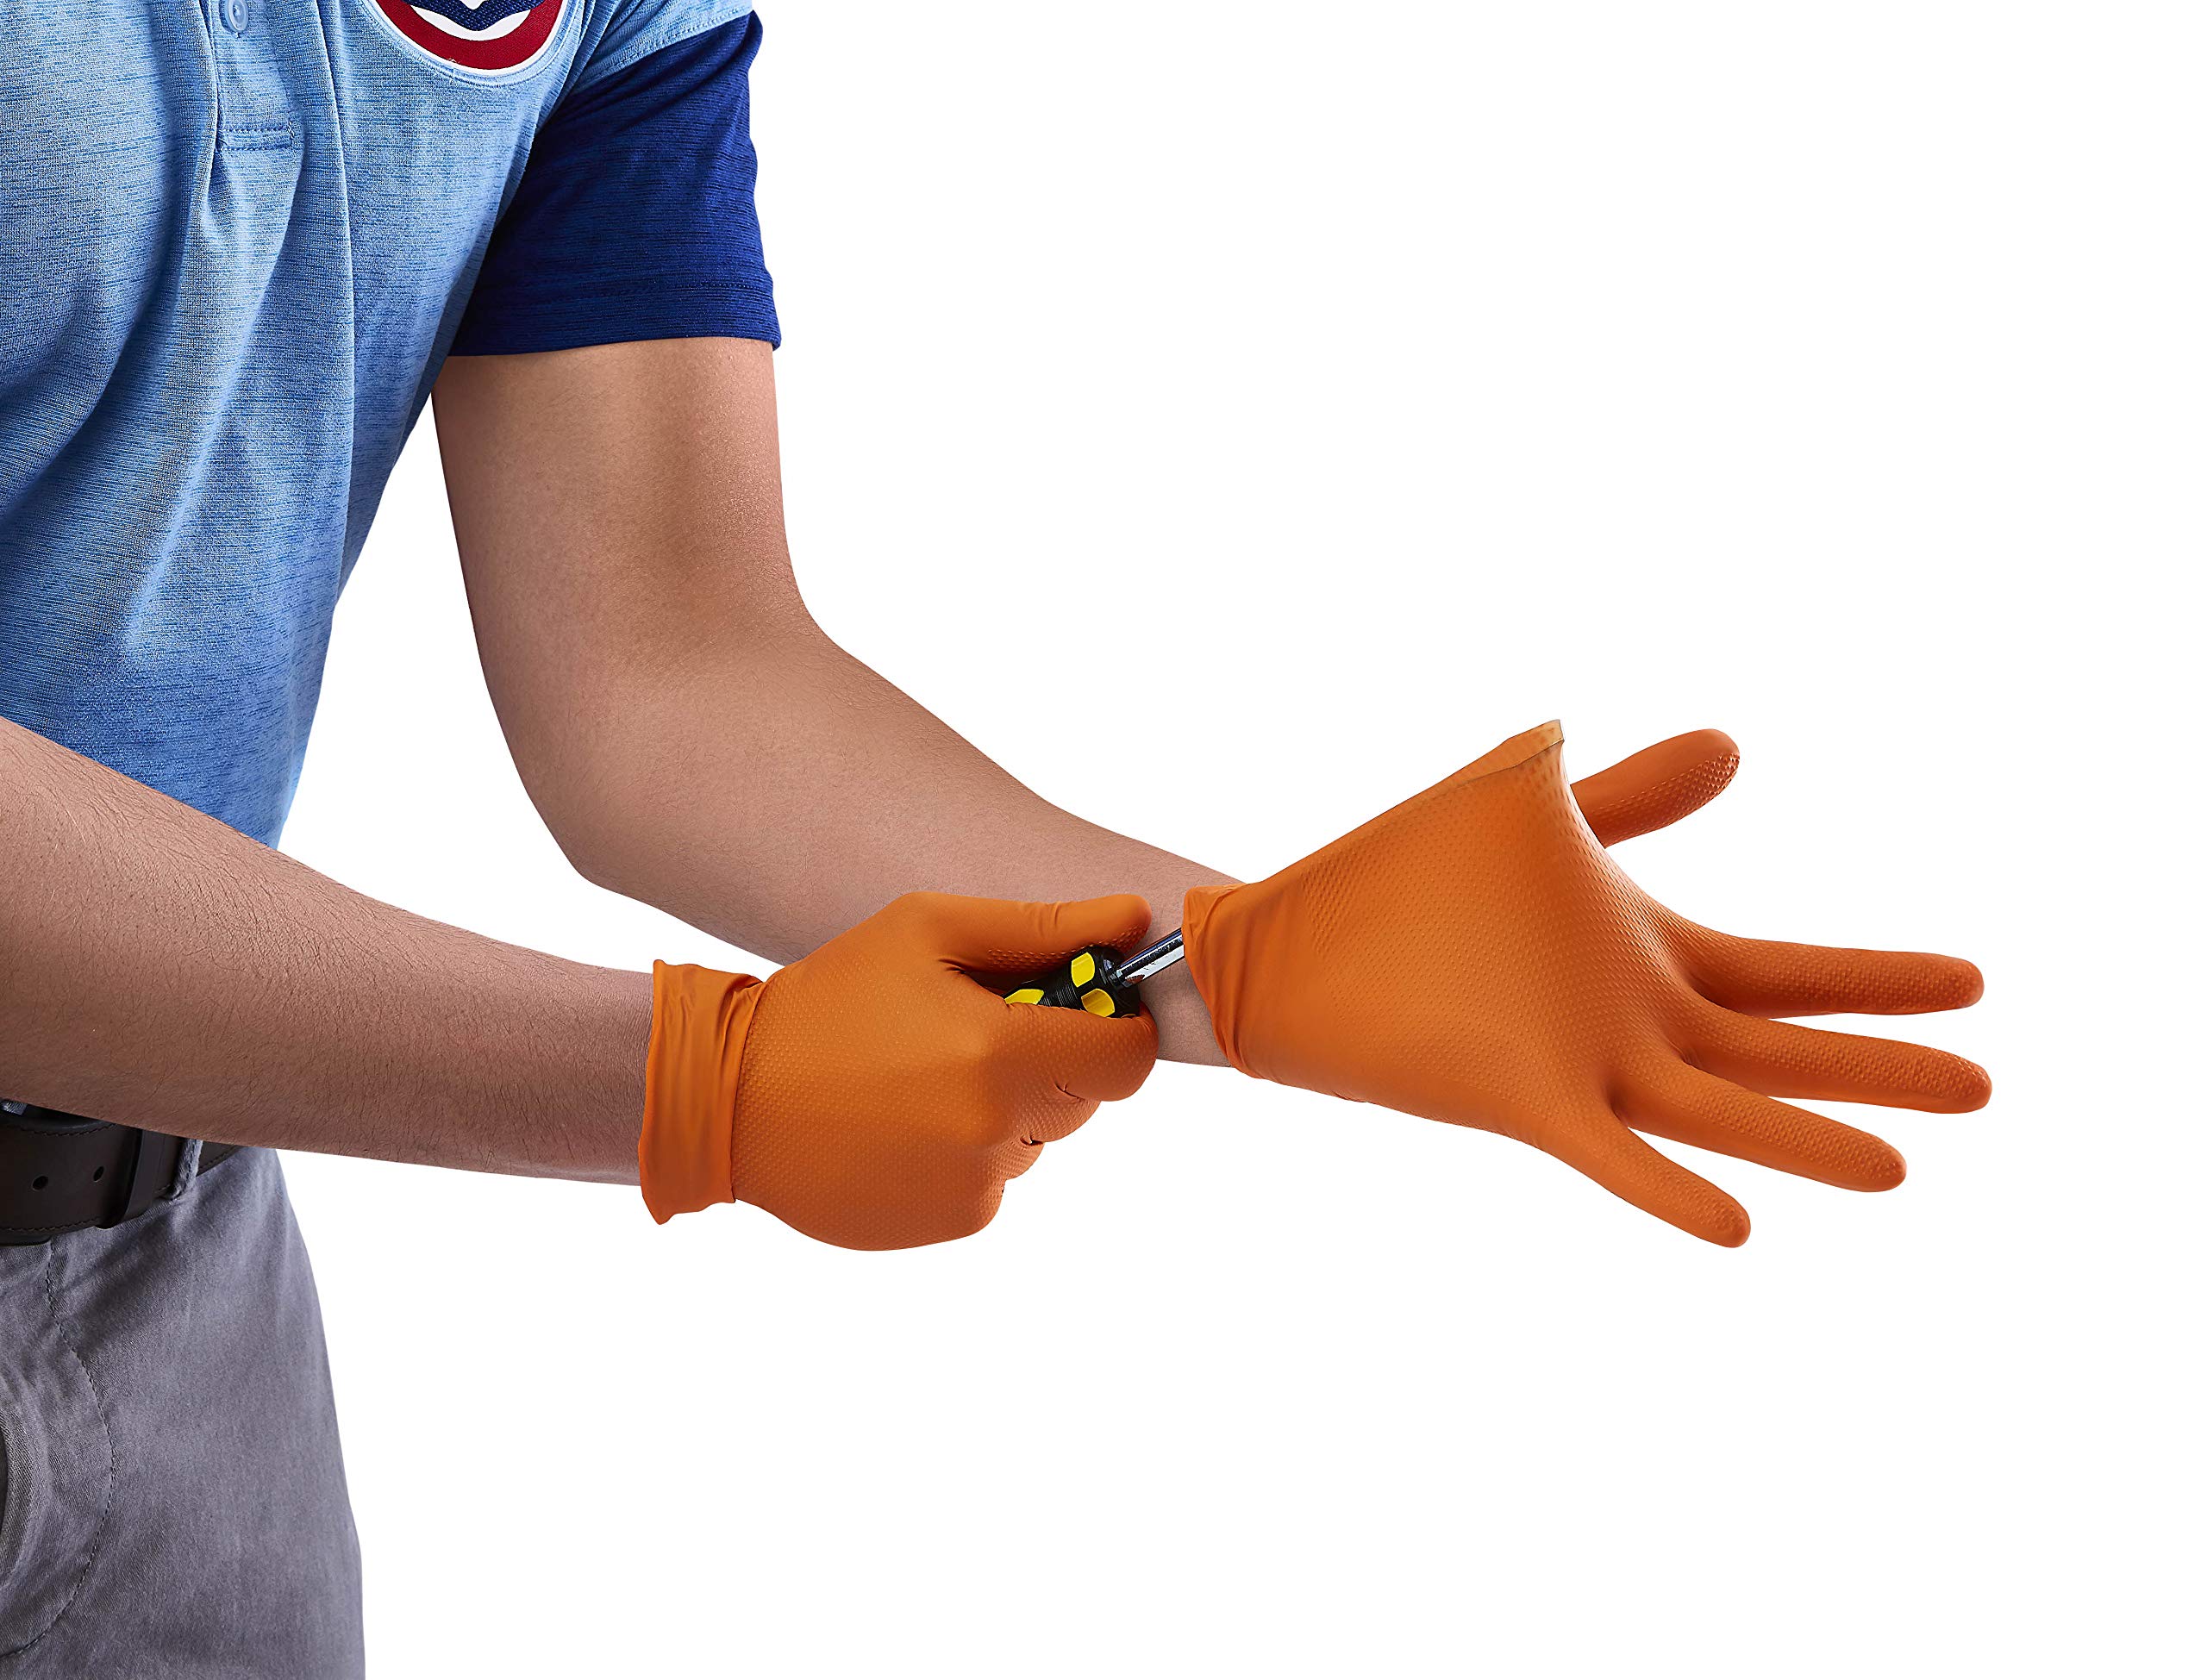 Venom Steel Maximum Grip Nitrile Gloves, 8 Mil Thick, Raised Diamond Texture For Grip, Puncture and Rip Resistant, Hi-Visibility Orange, Large (100 Count)